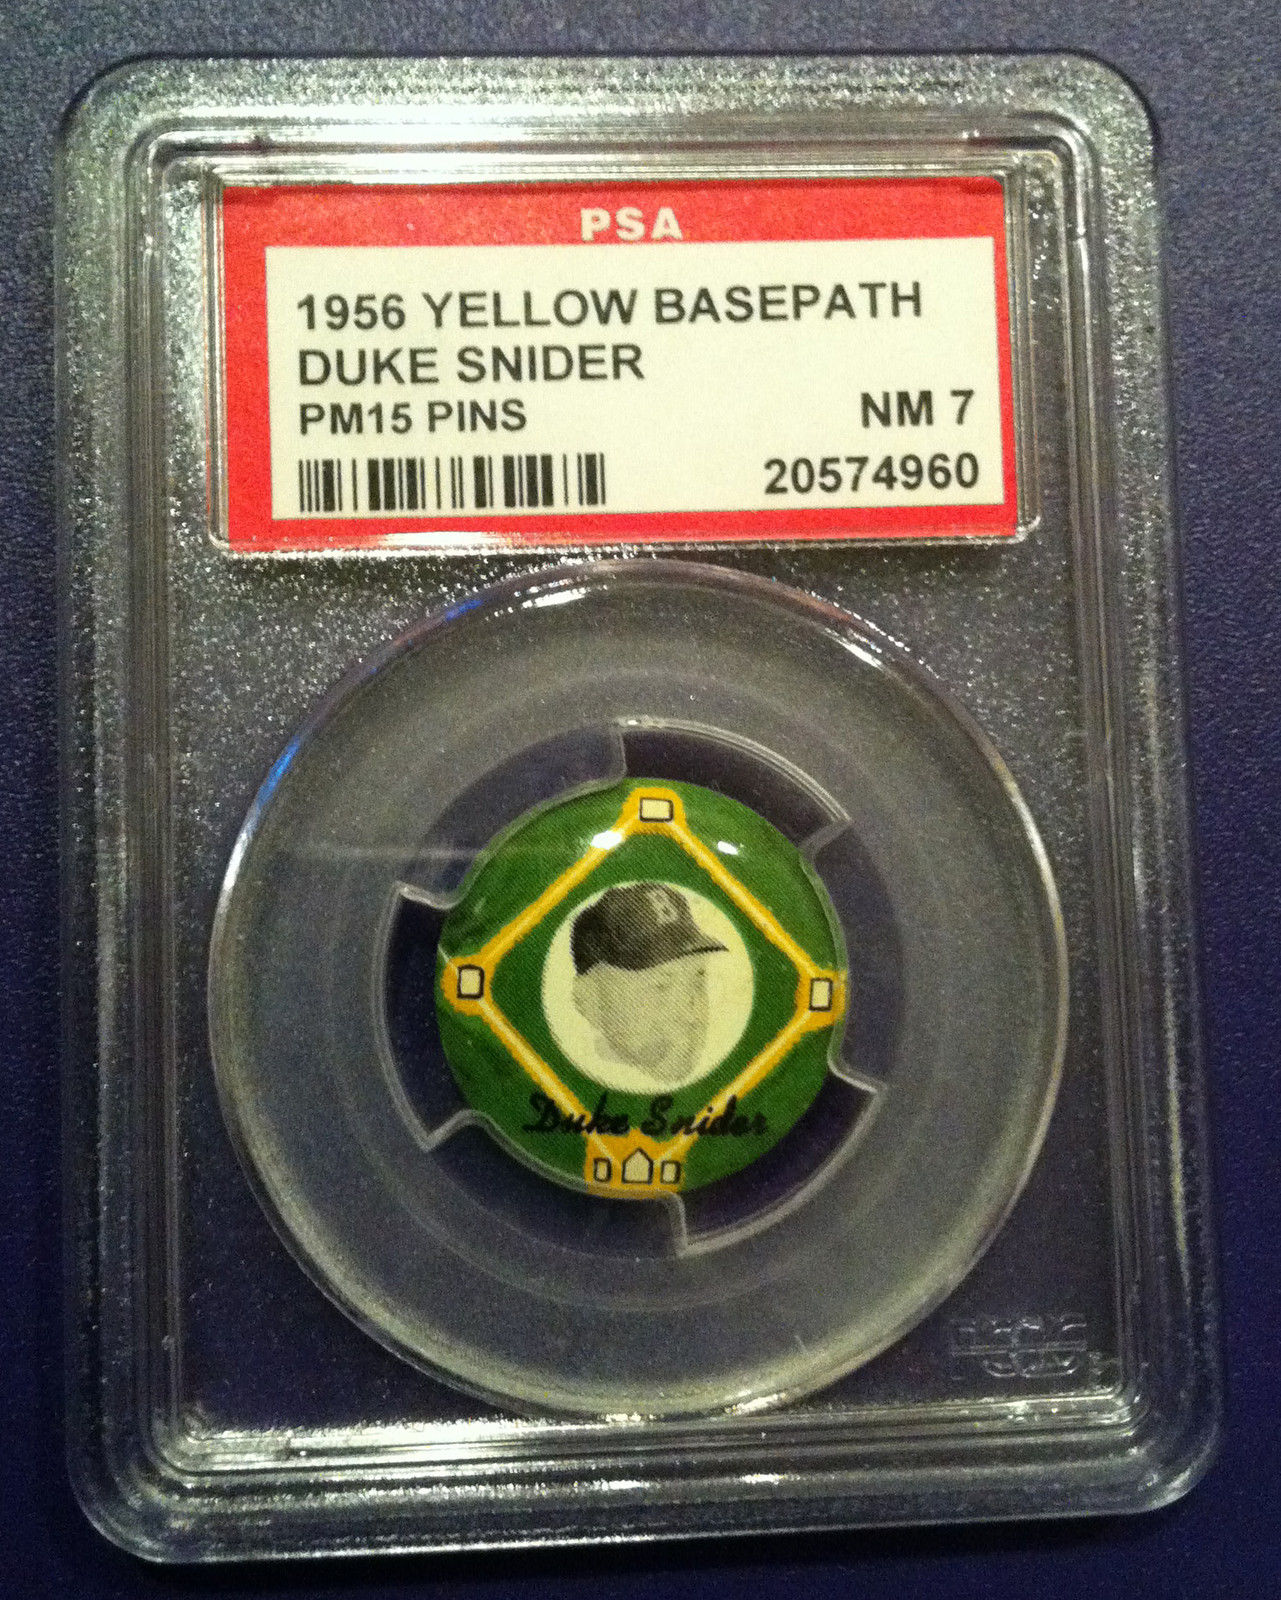 1956 Yellow Basepath Duke Snider Pin PSA 7 nm mint Brooklyn Dodgers RARE pm15